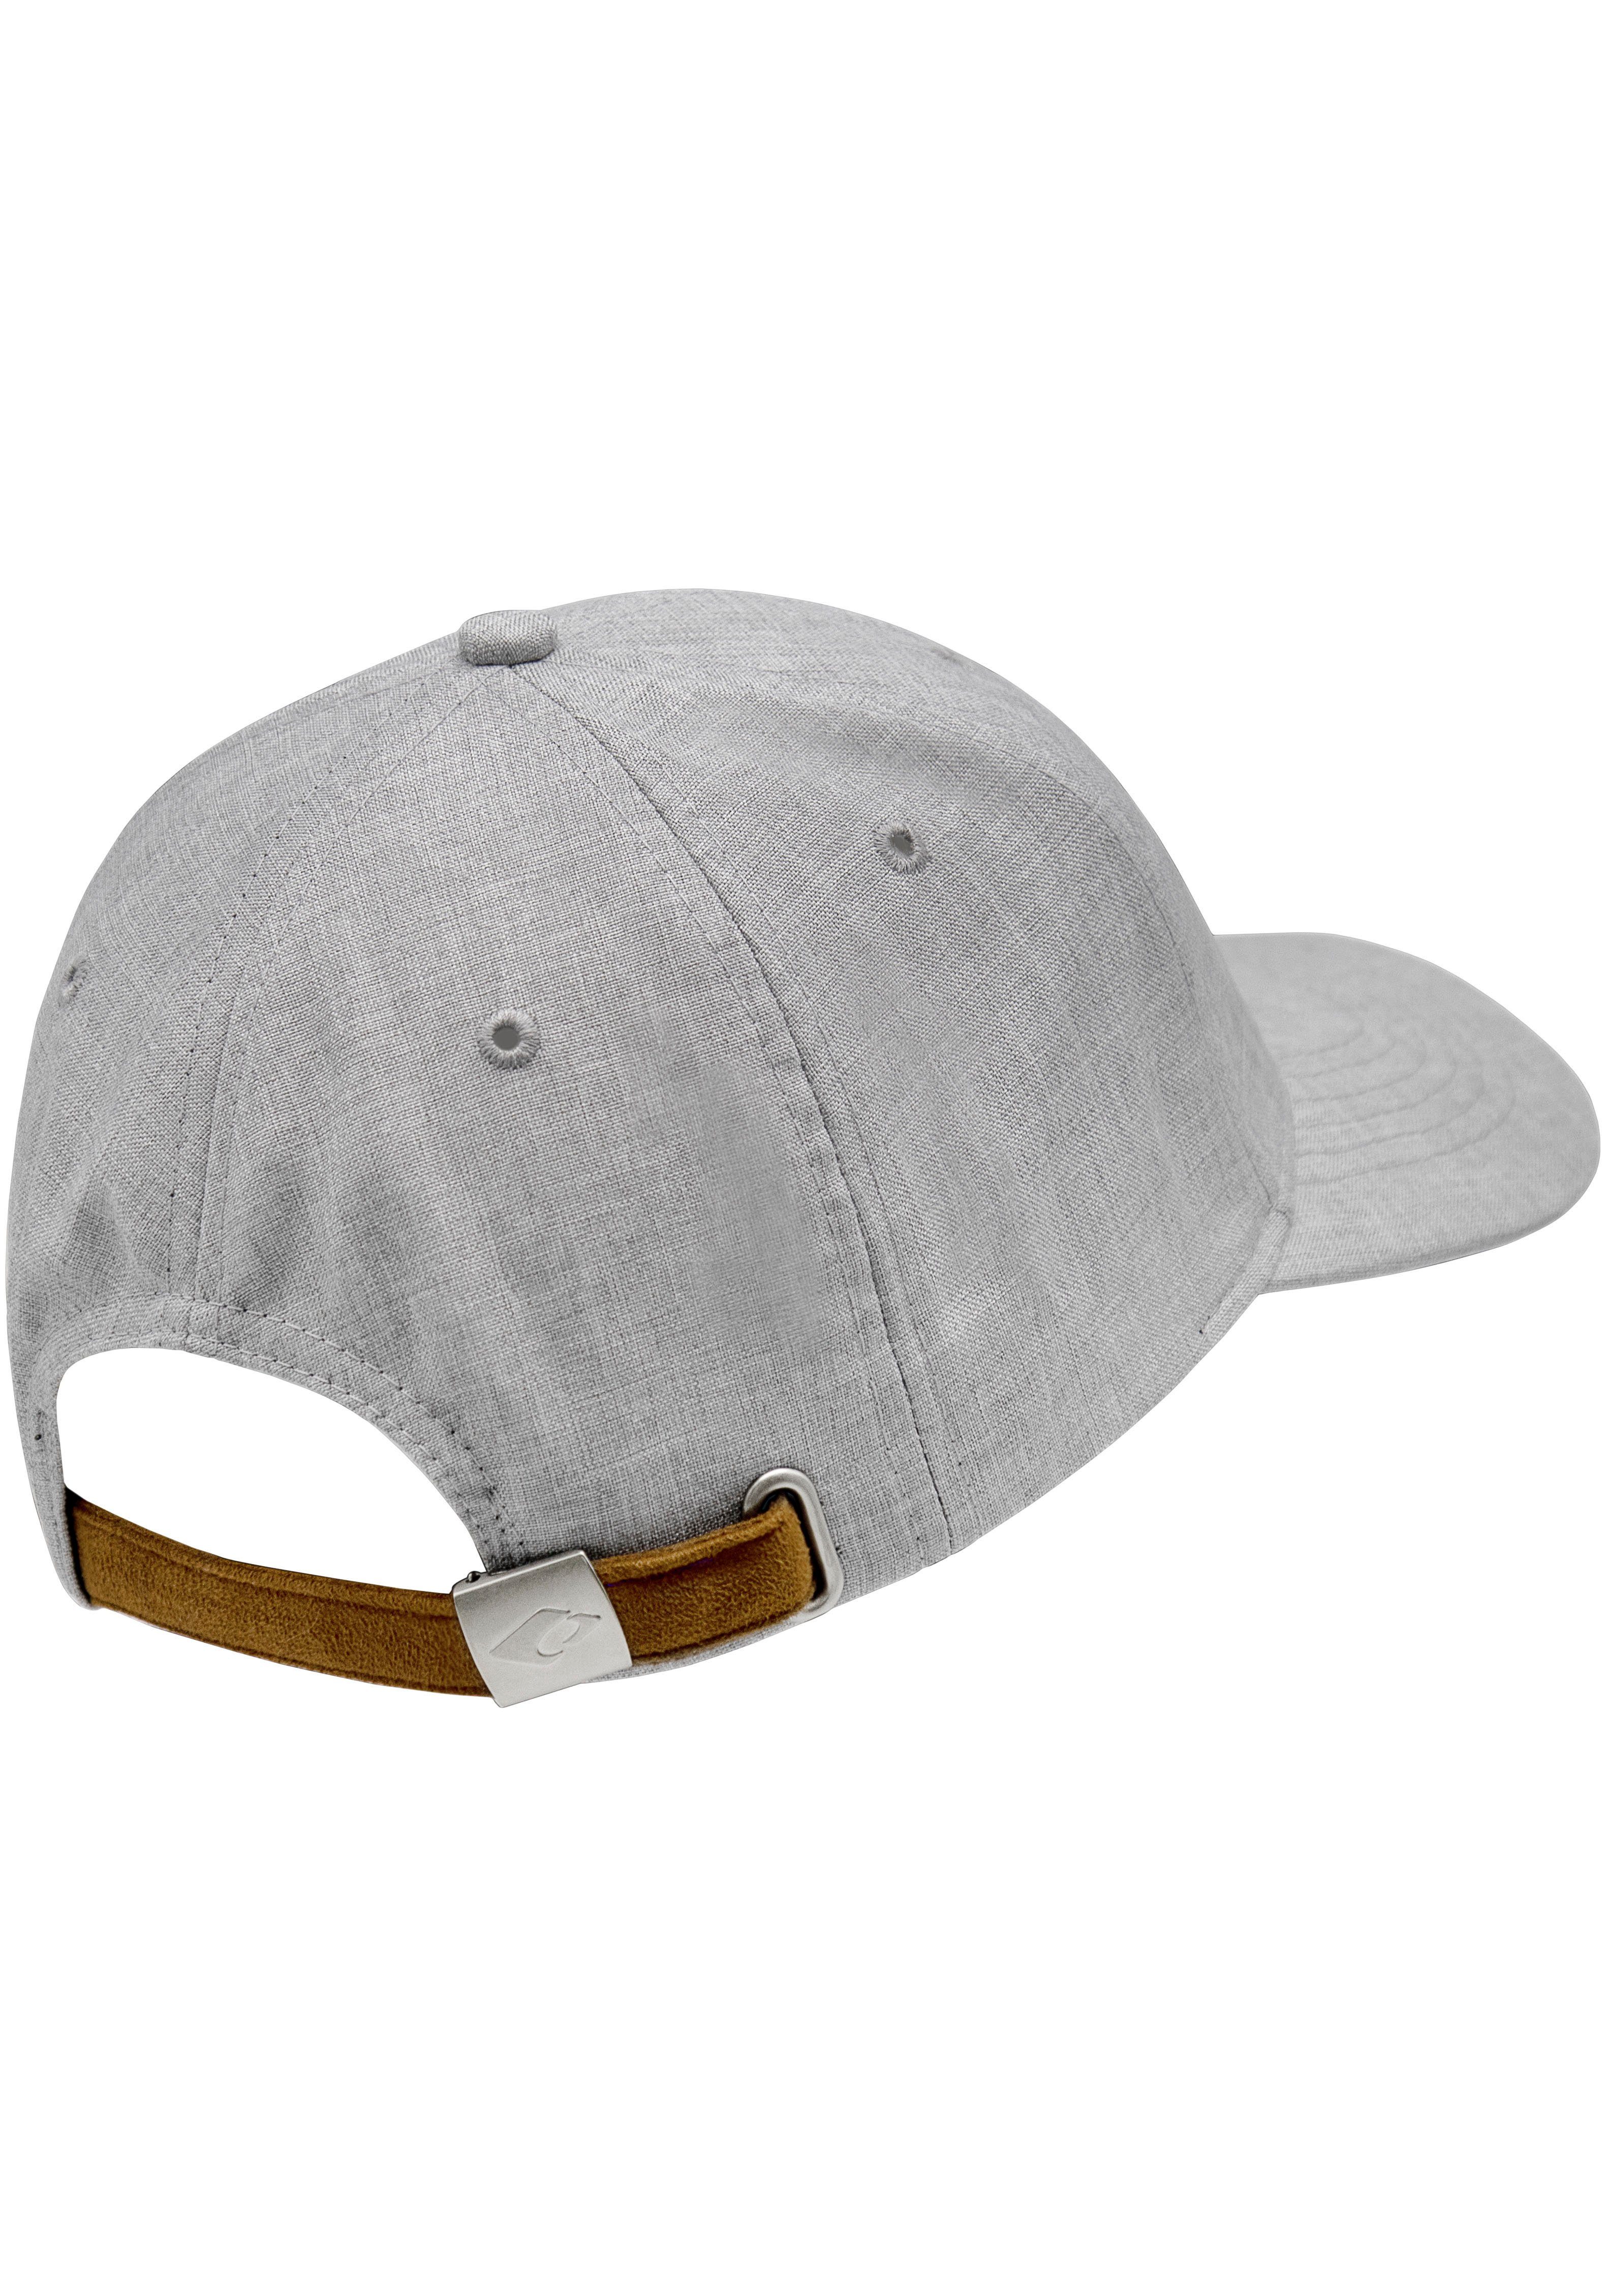 Optik, Amadora in Baseball chillouts Hat Cap Size, One verstellbar hellgrau melierter